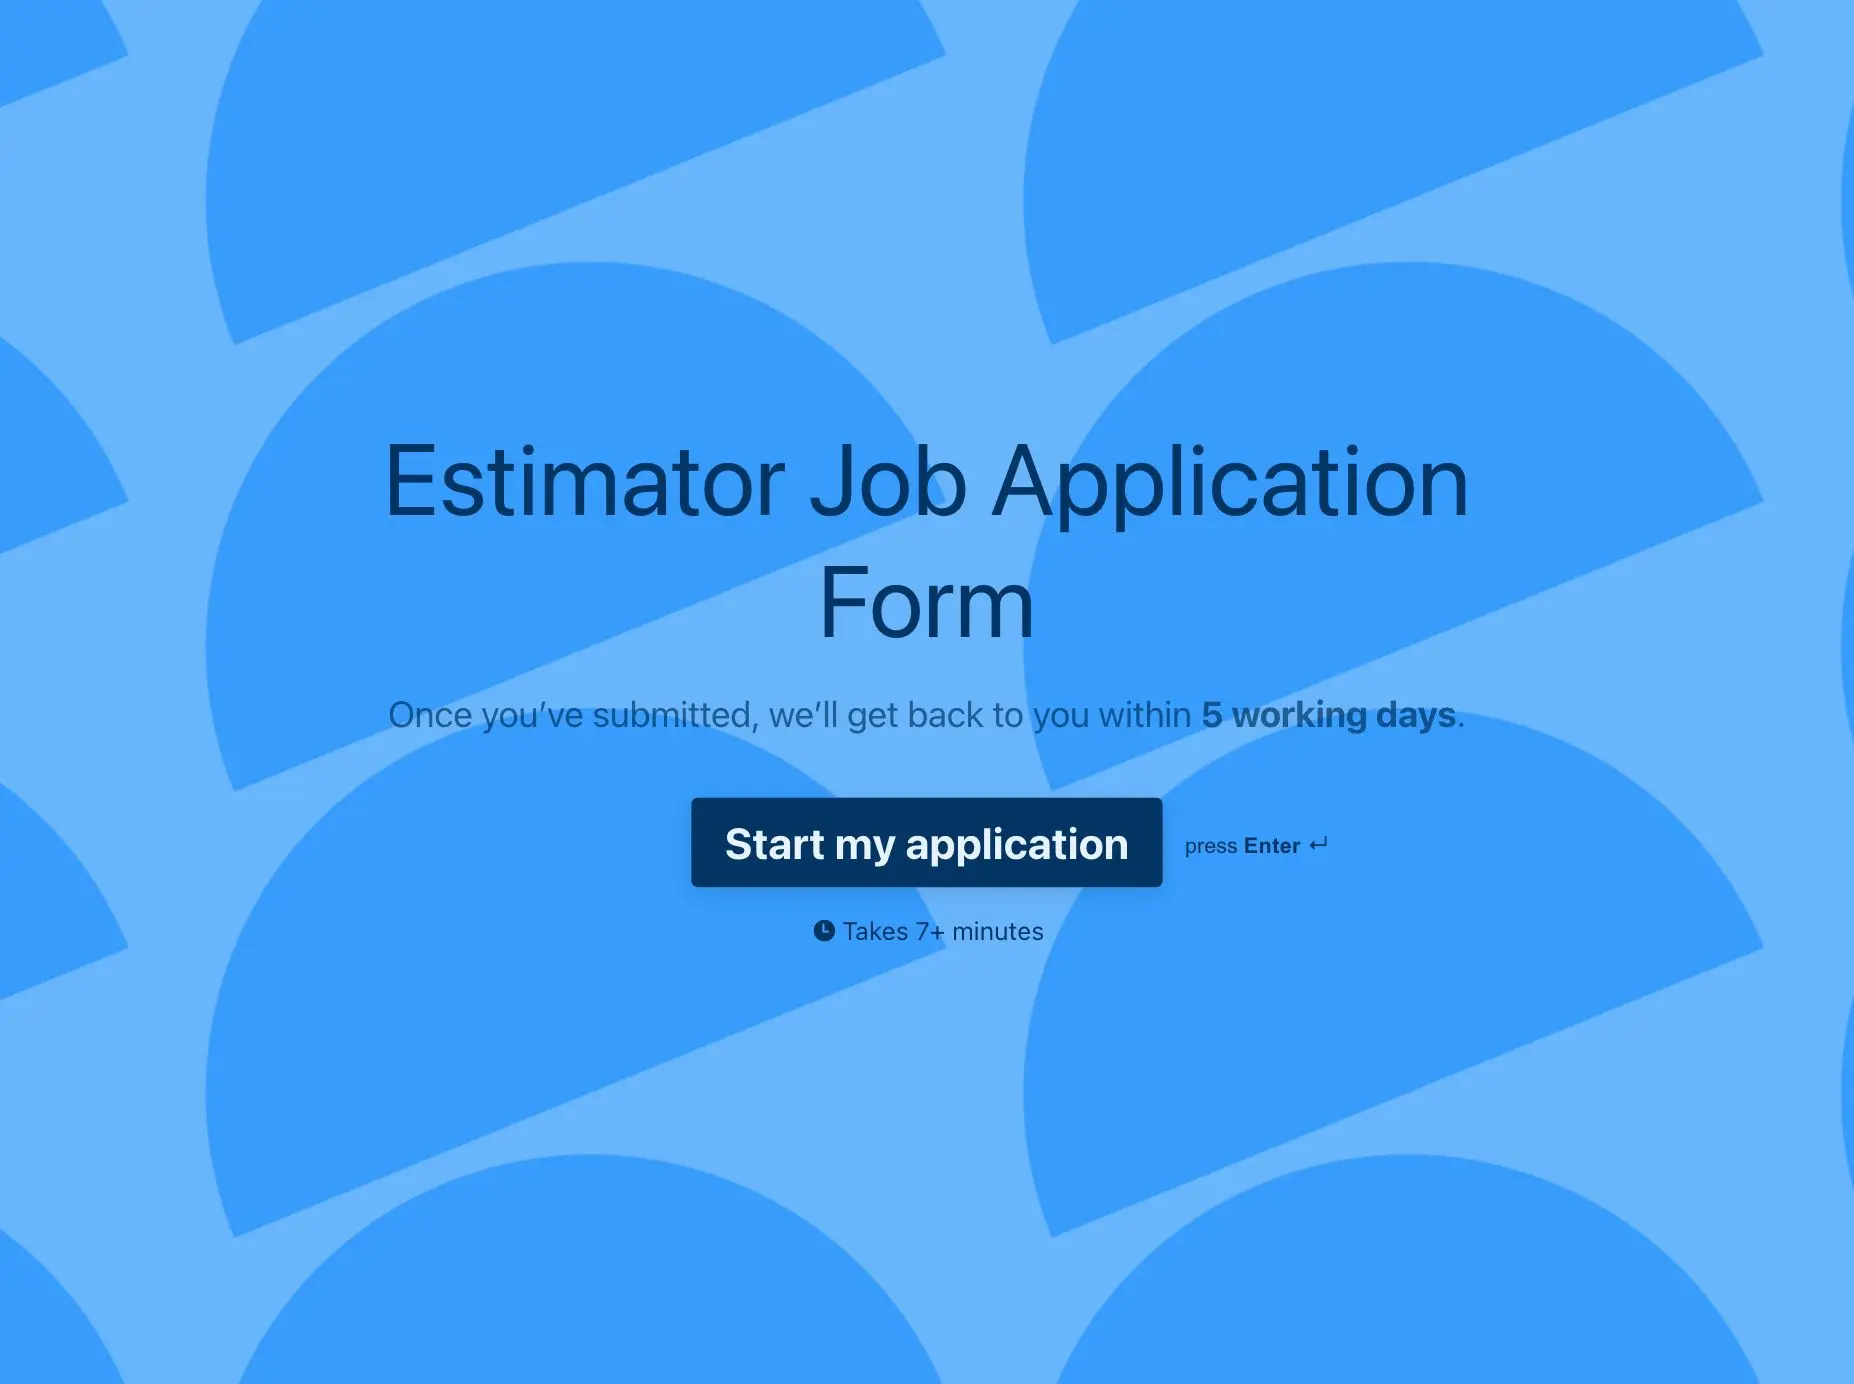 Estimator Job Application Form Template Hero